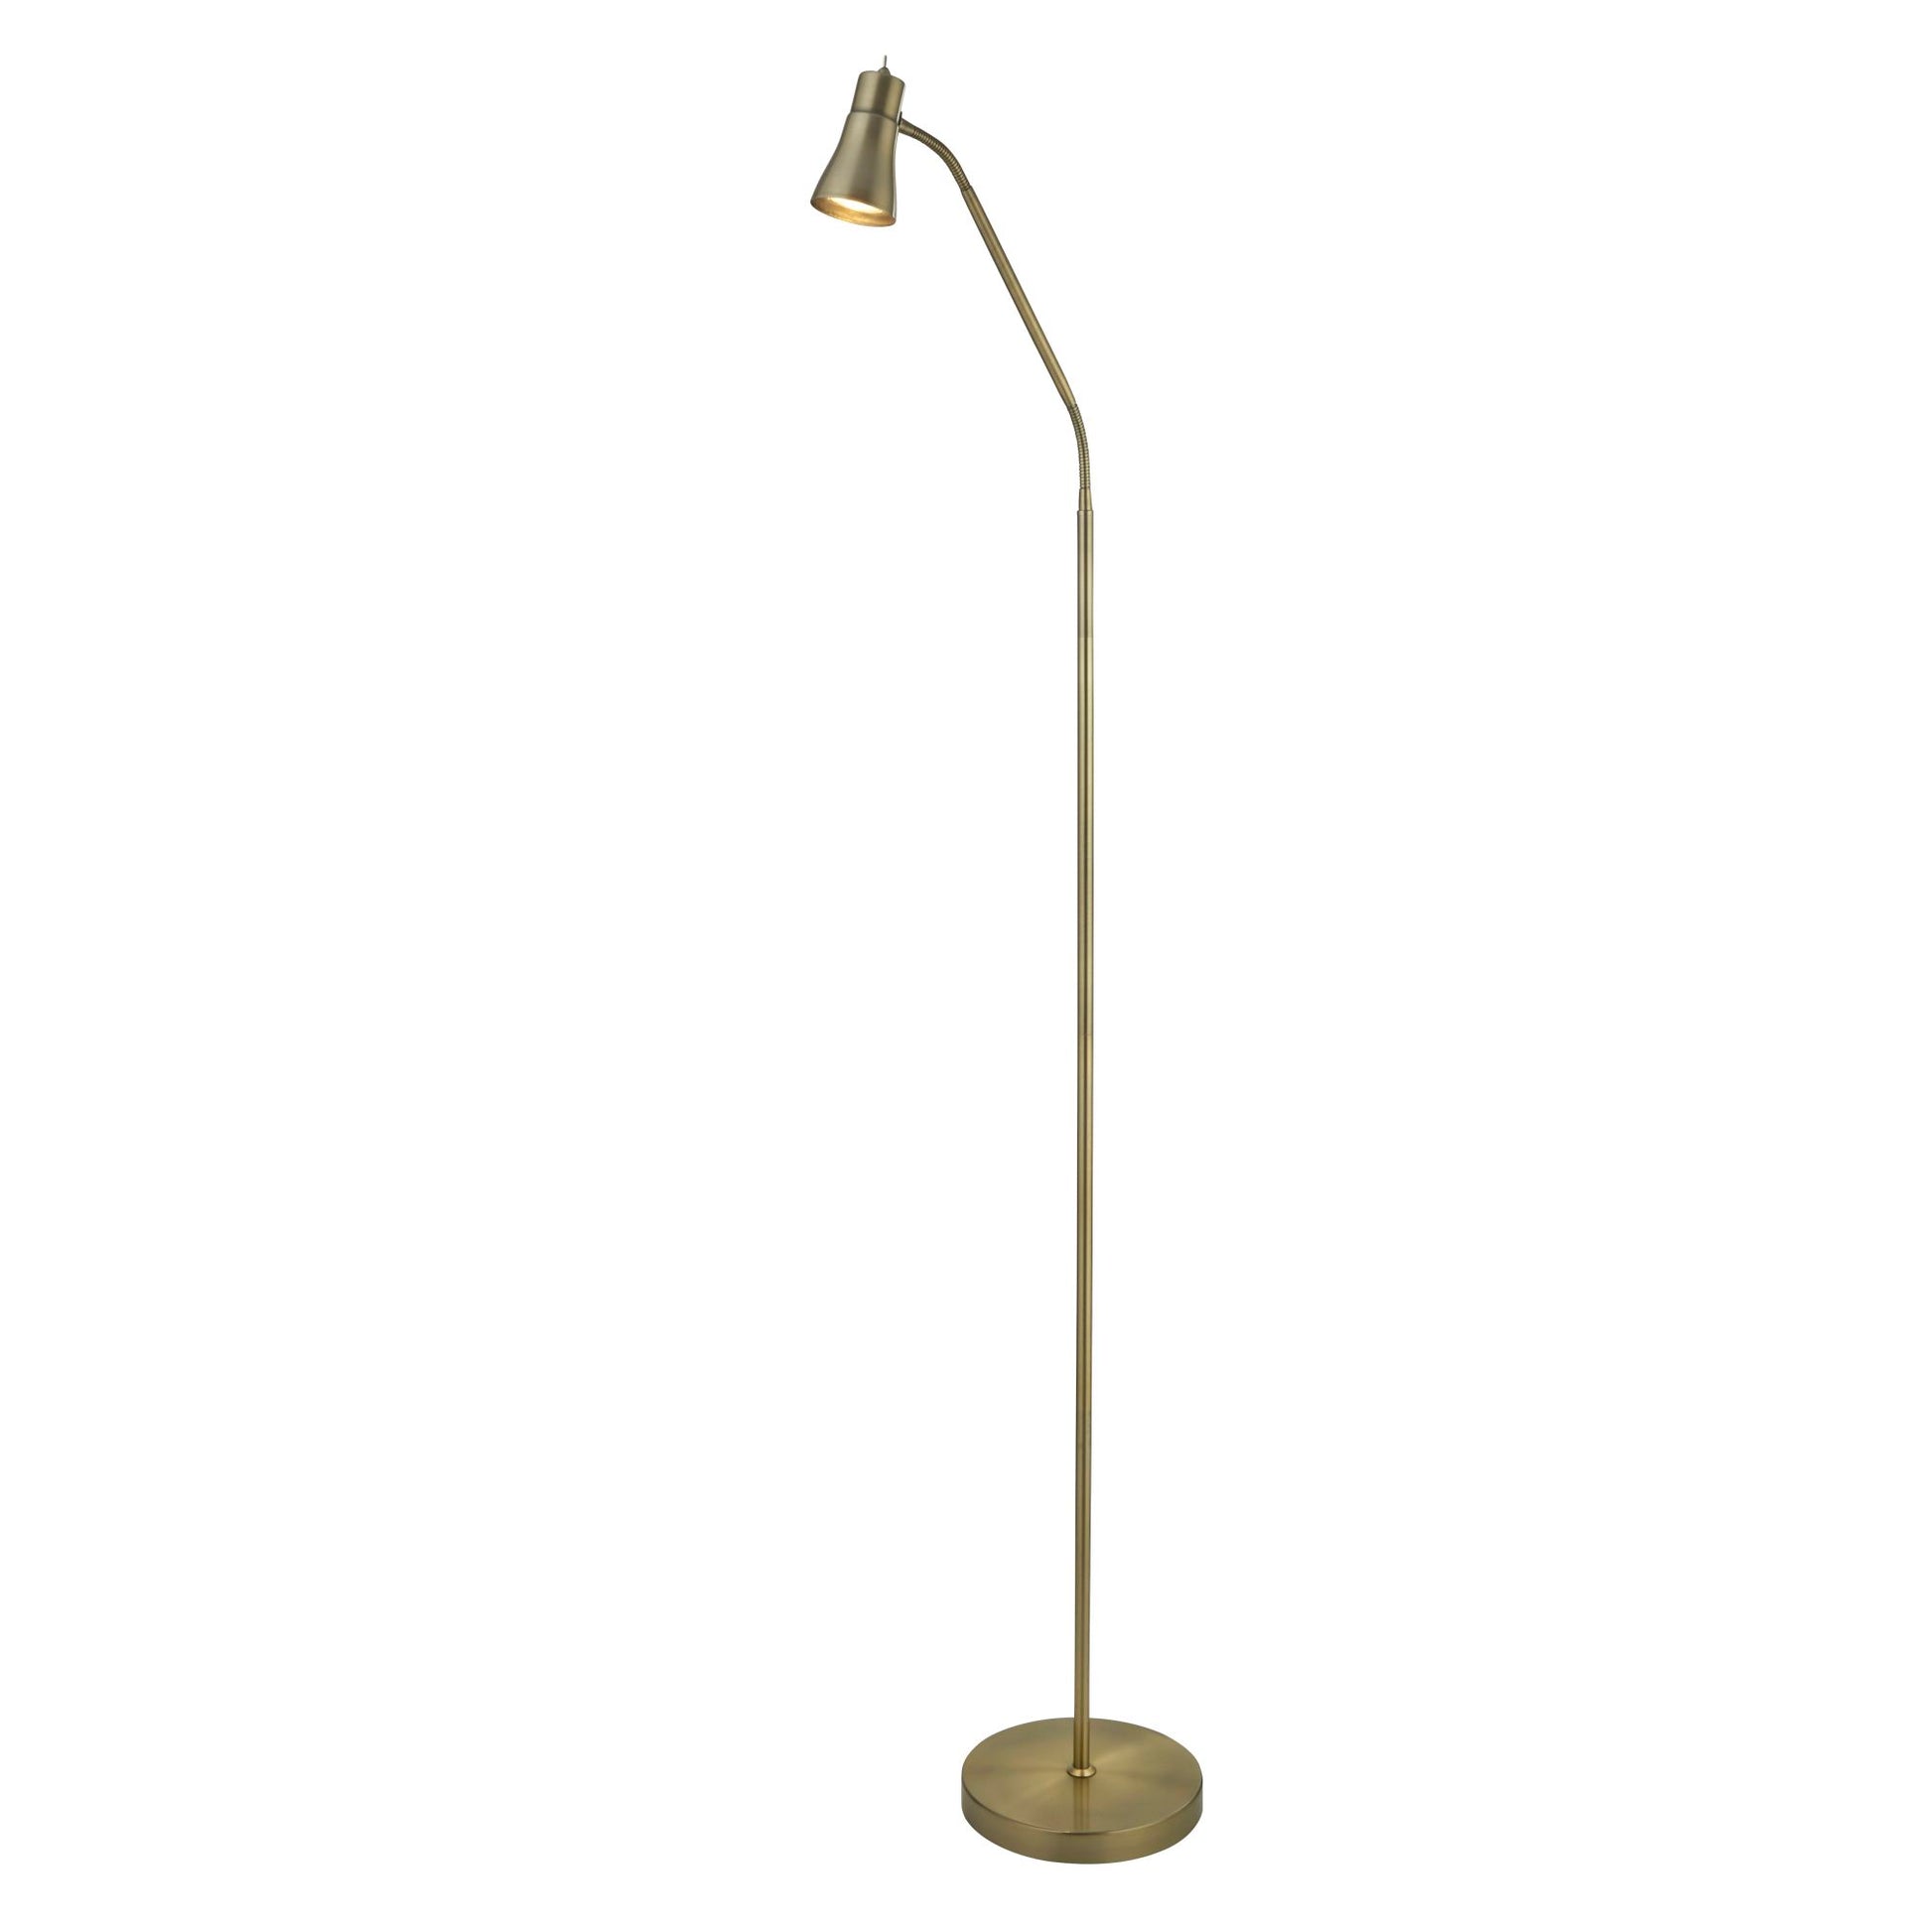 Antique Brass Floor Lamp With Flexi Head